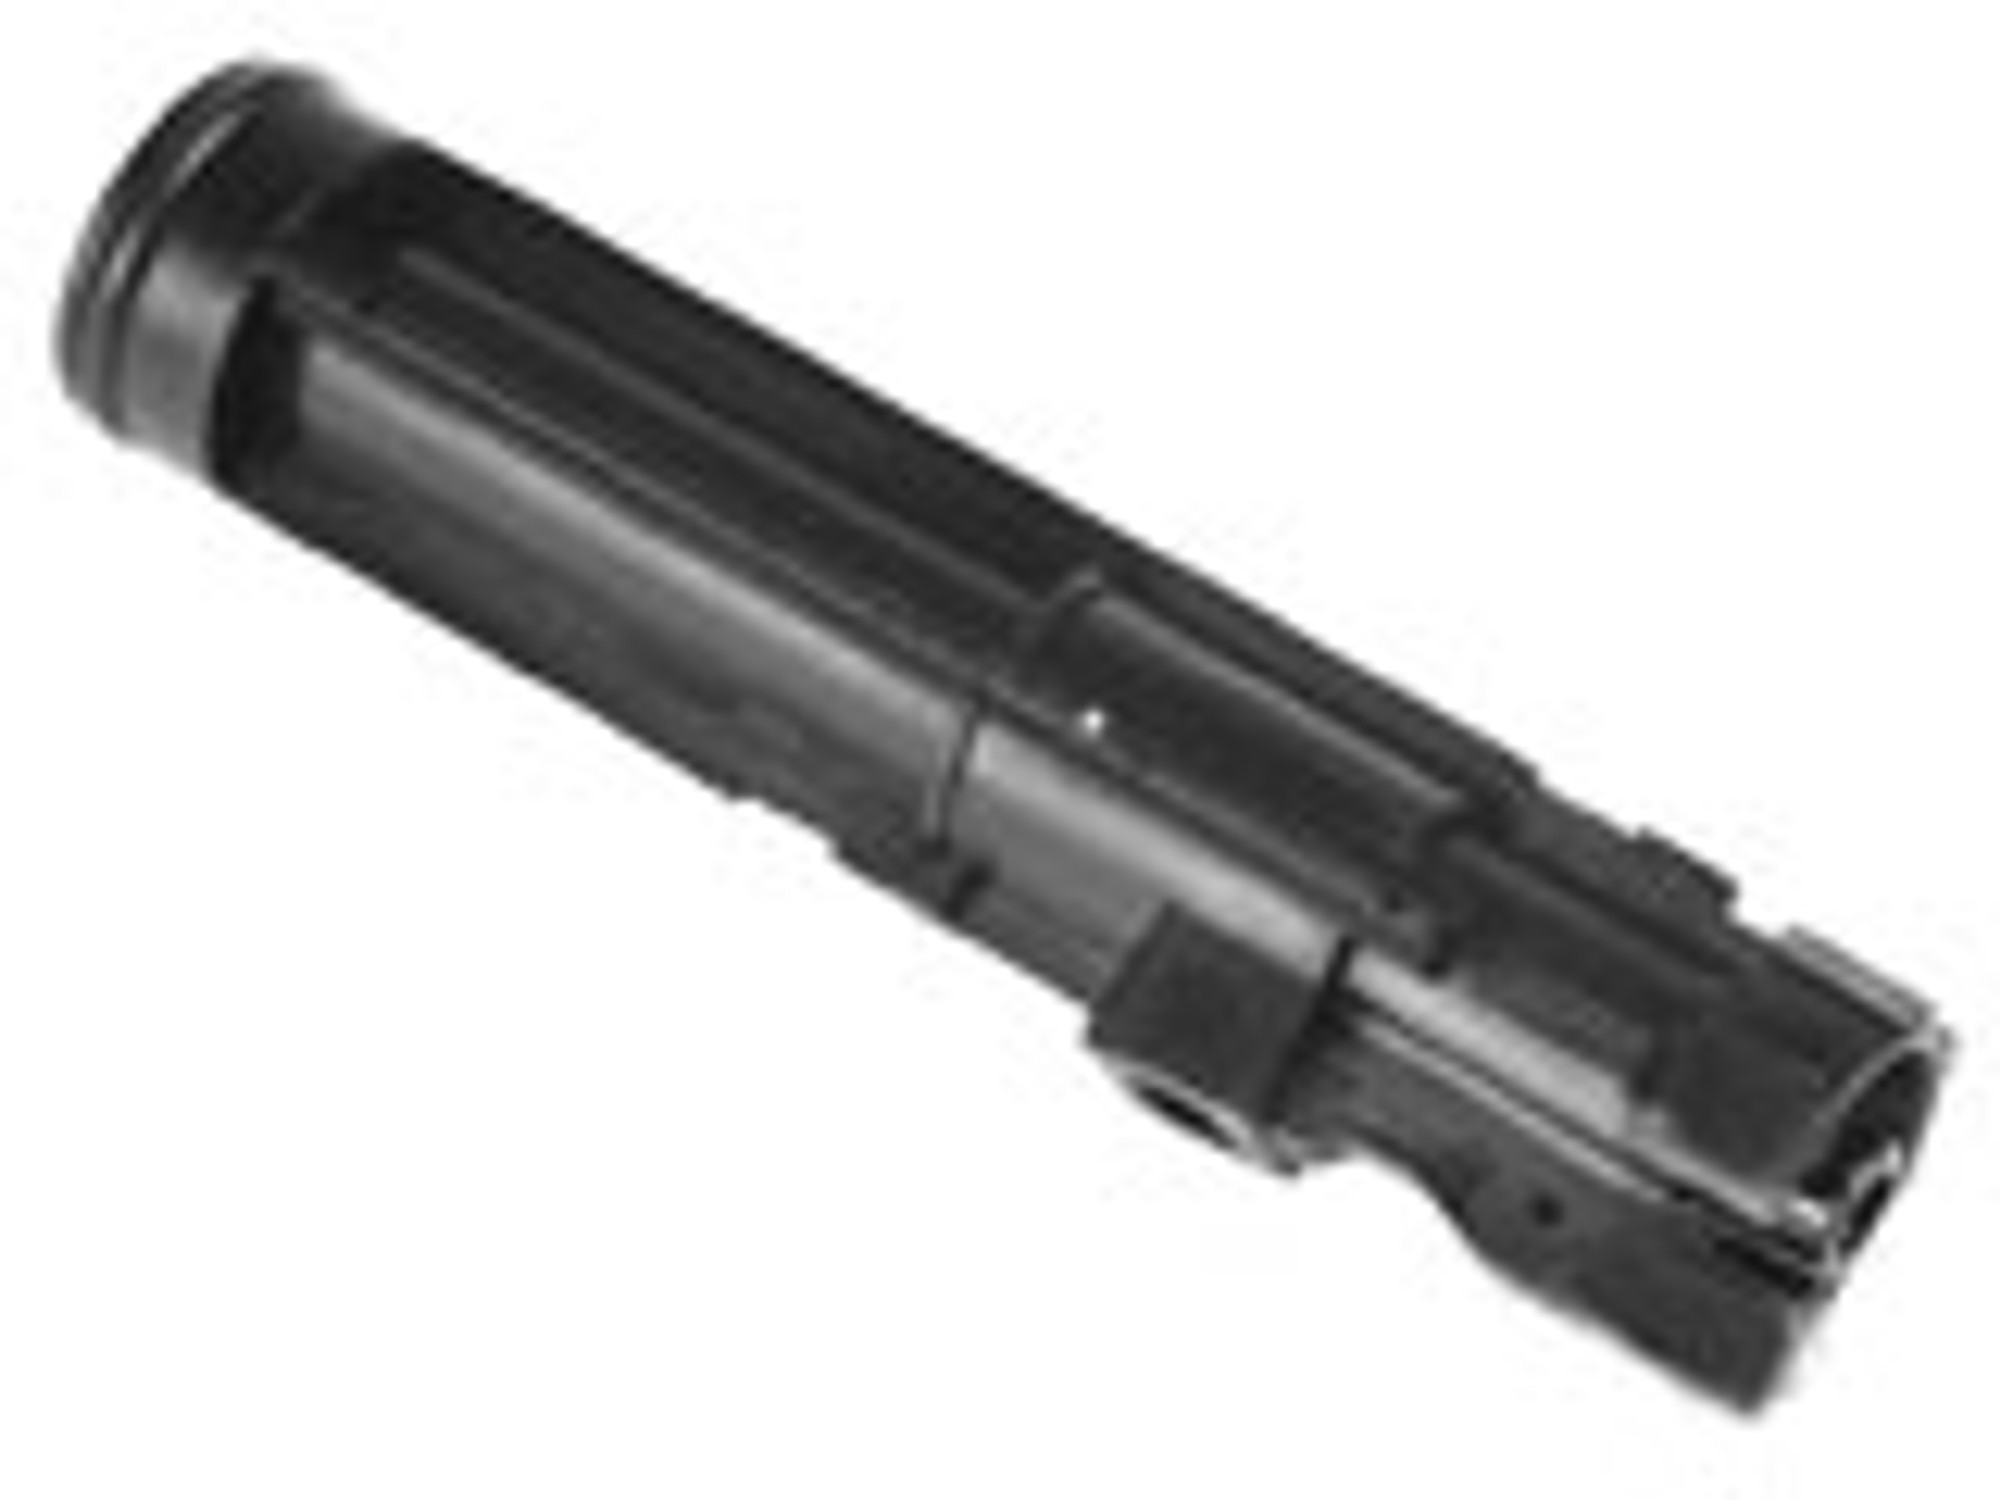 WE-Tech G39 Gas Blowback Rifle Factory Nozzle Assembly - Part#7, 8, 9, 14, 15, 18, 122